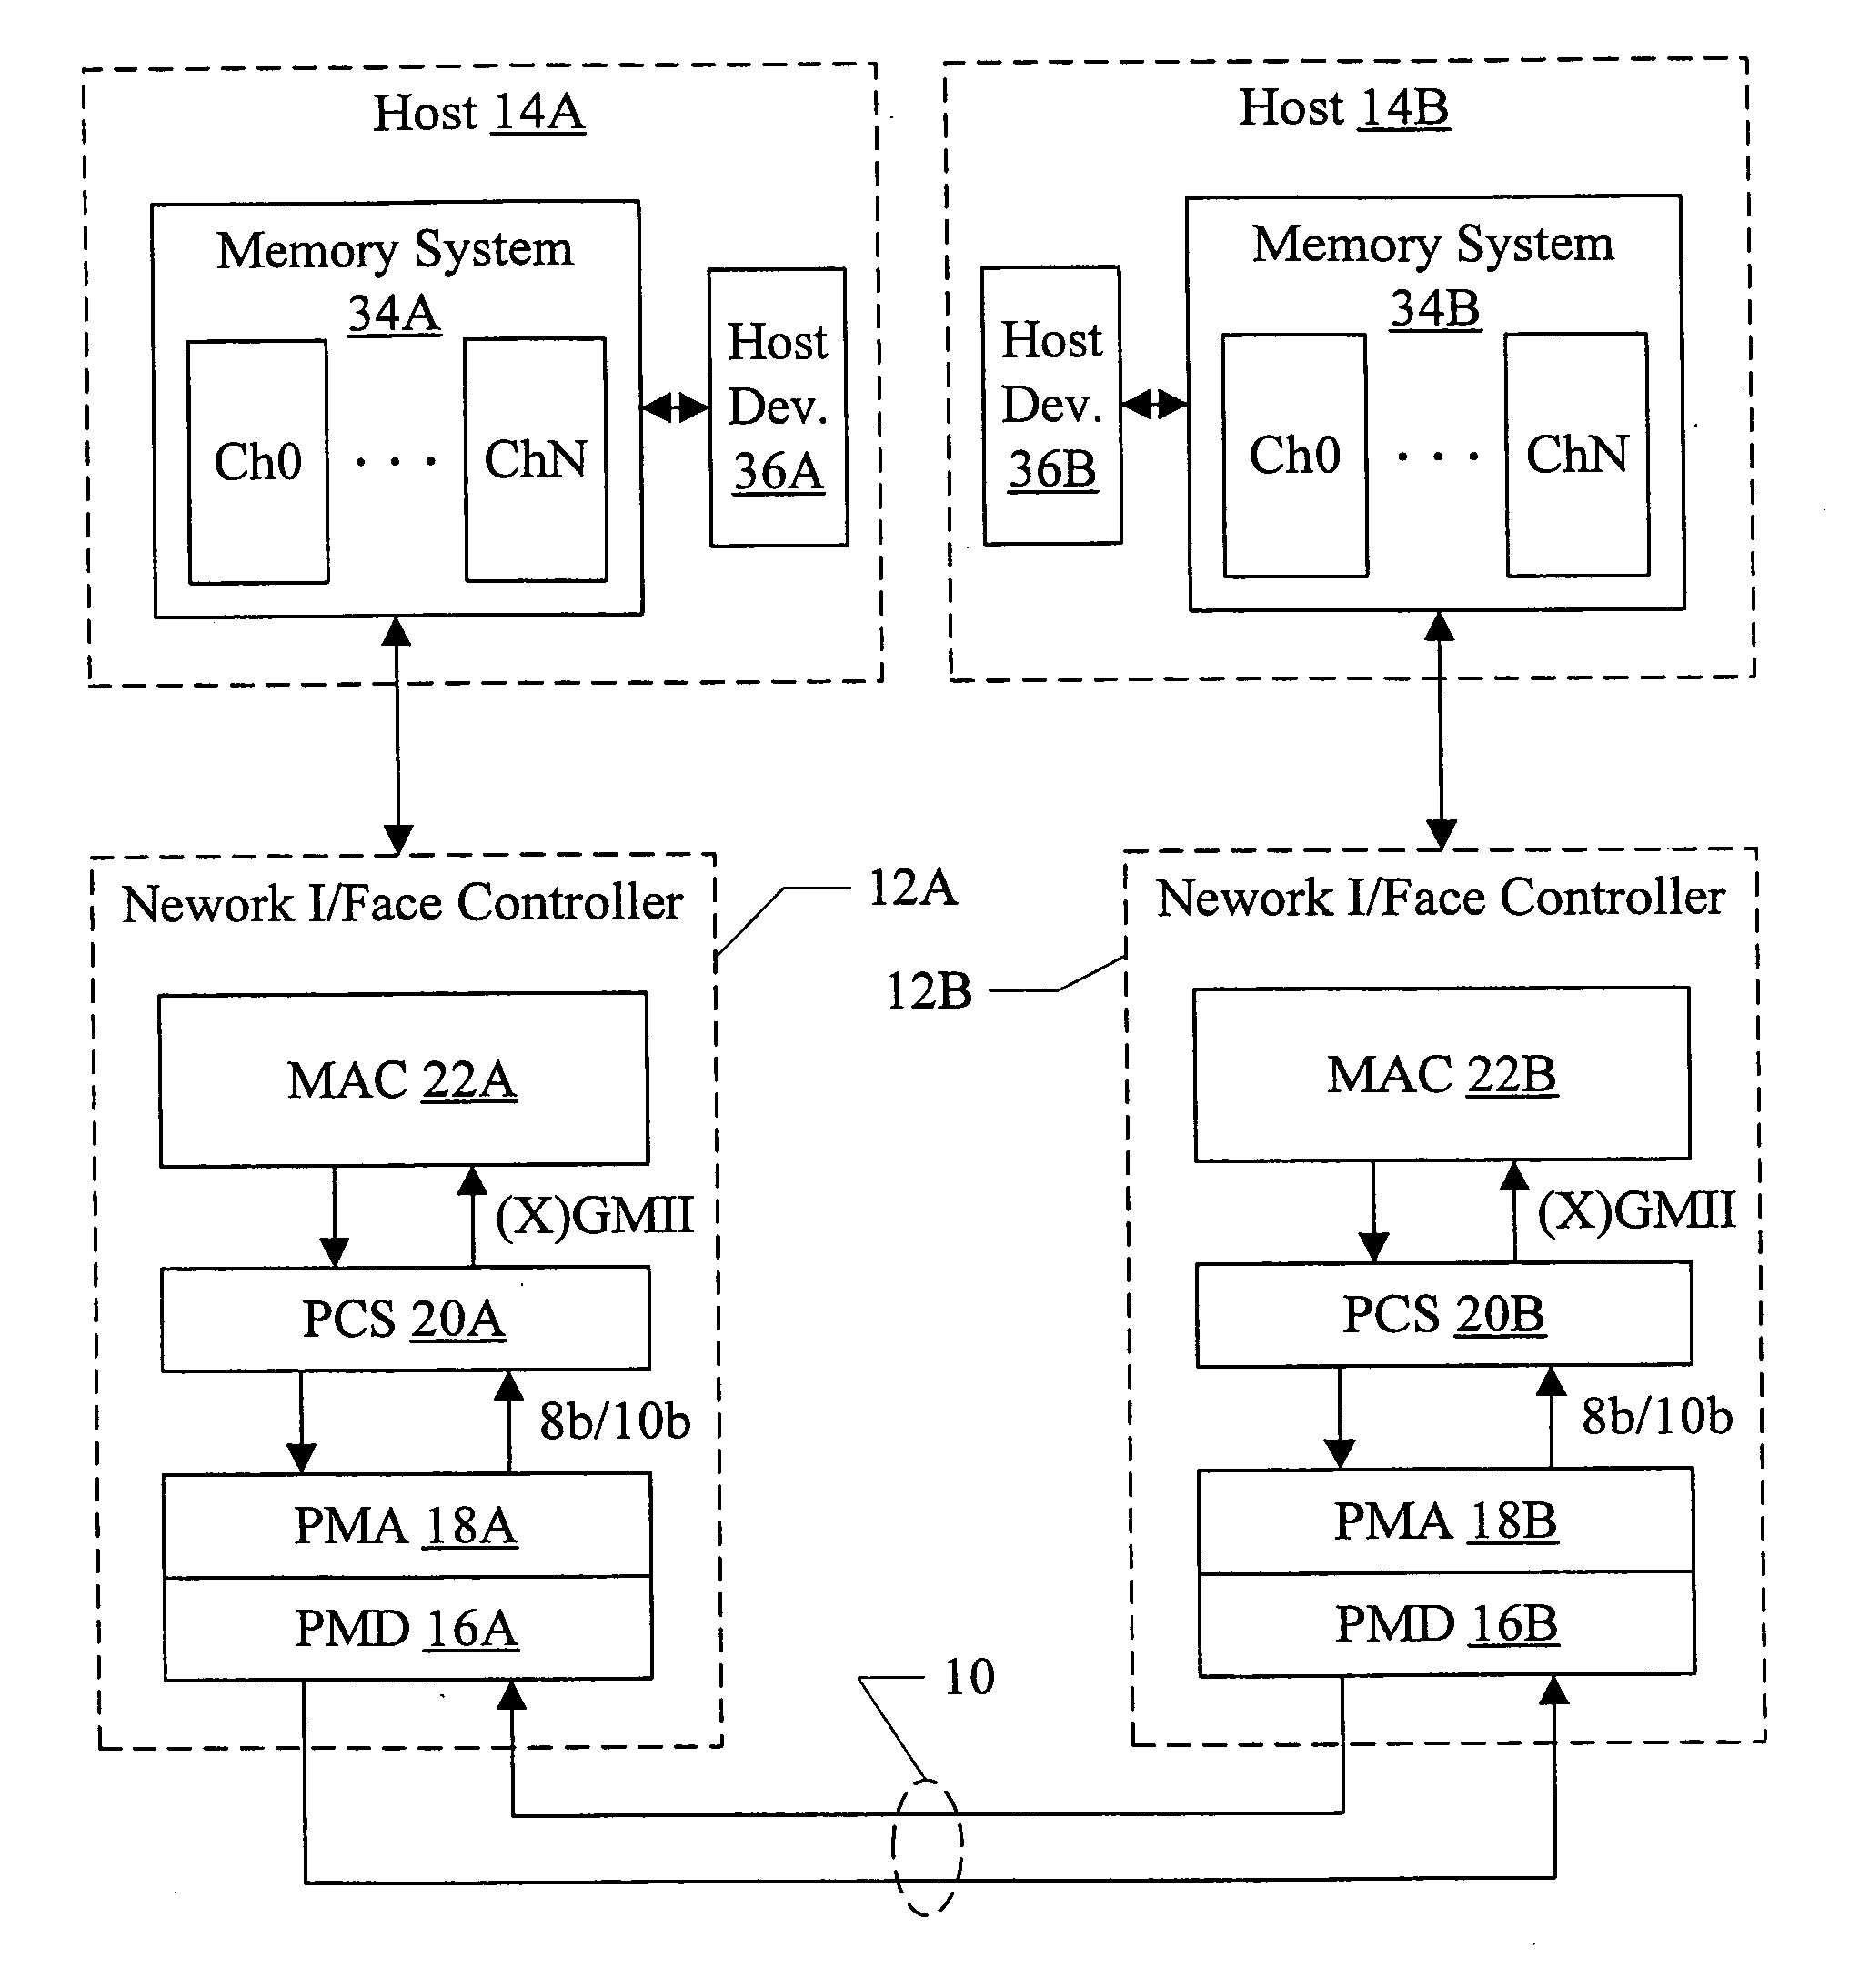 Explicit flow control in Gigabit/10 Gigabit Ethernet system